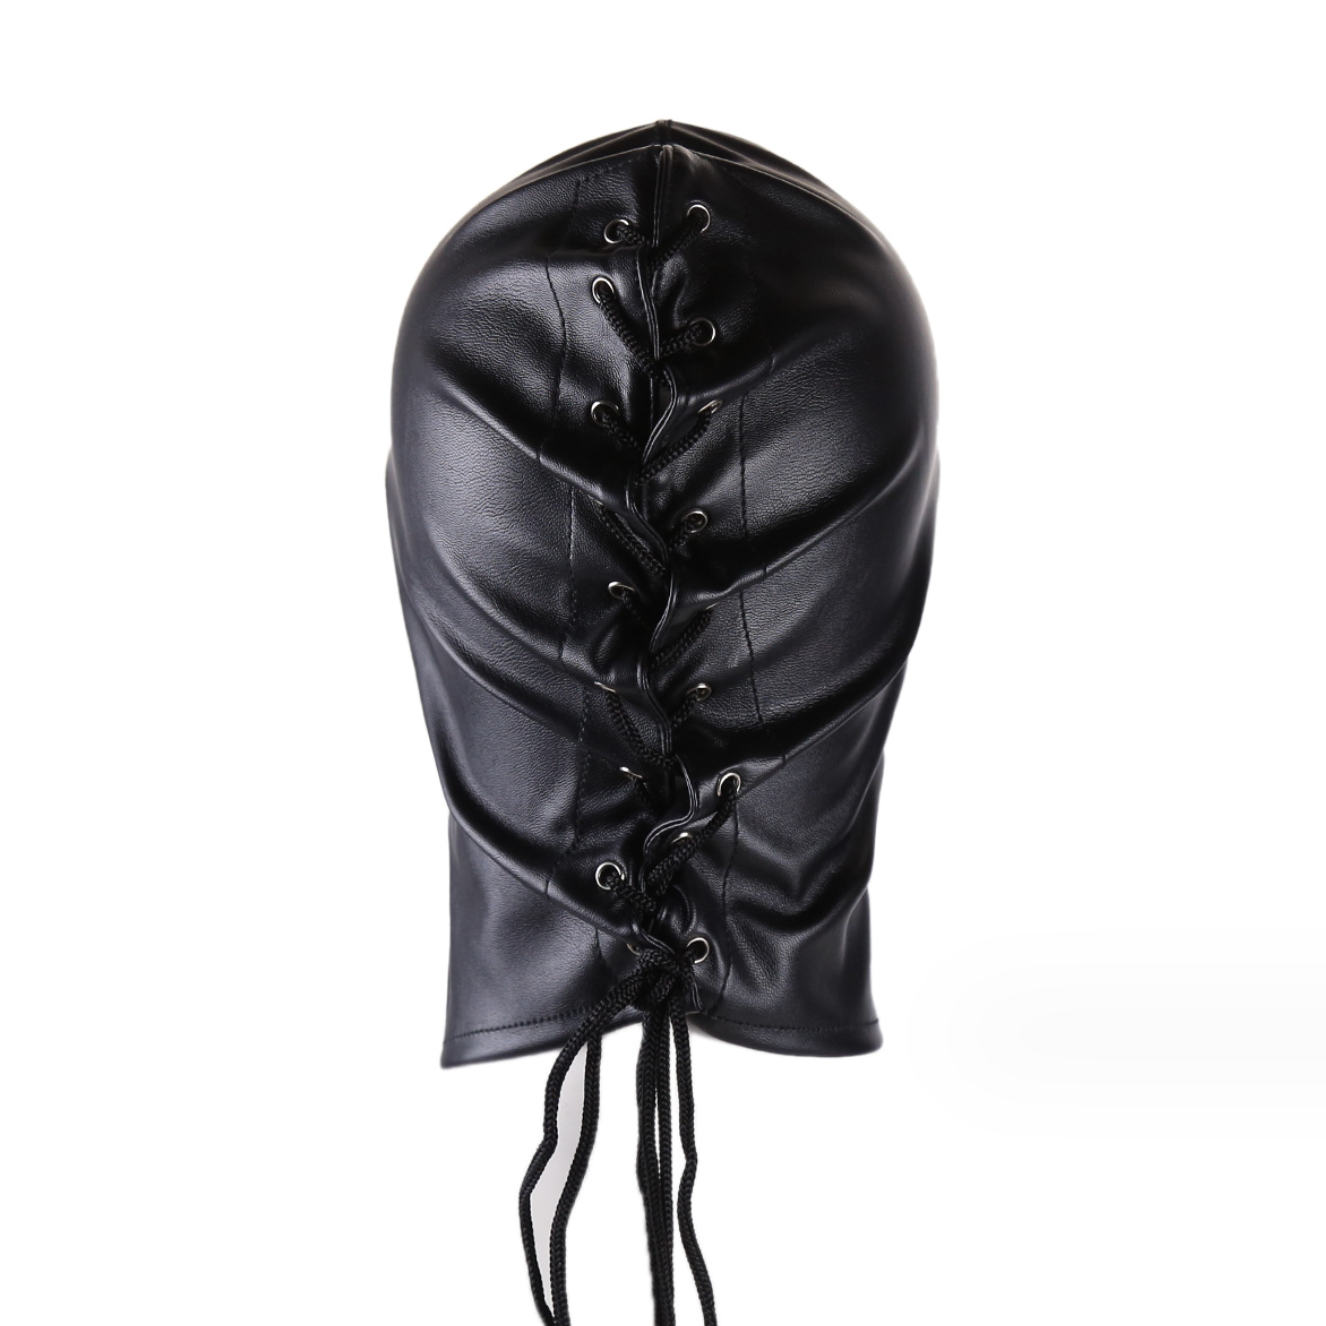 Black leather head mask restraint bondage BDSM V3 皮革头部封闭口塞束缚调教 V3 BDSM 1498